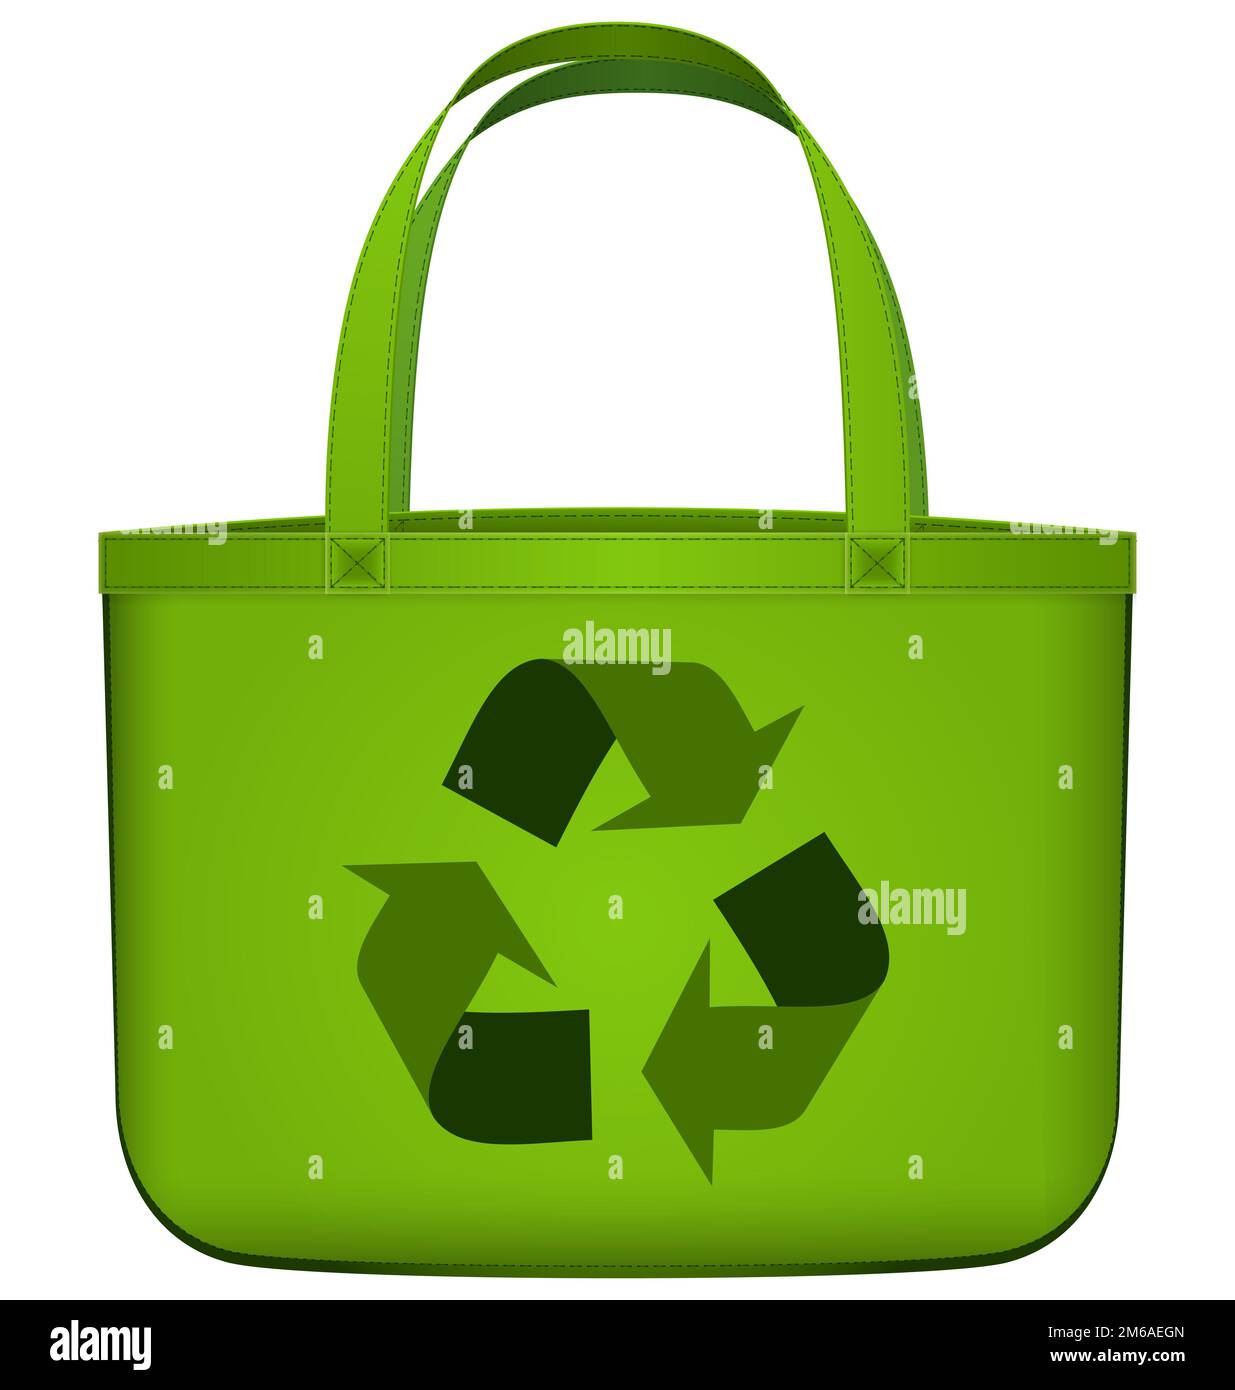 https://c8.alamy.com/comp/2M6AEGN/green-reusable-bag-with-recycling-symbol-vector-2M6AEGN.jpg